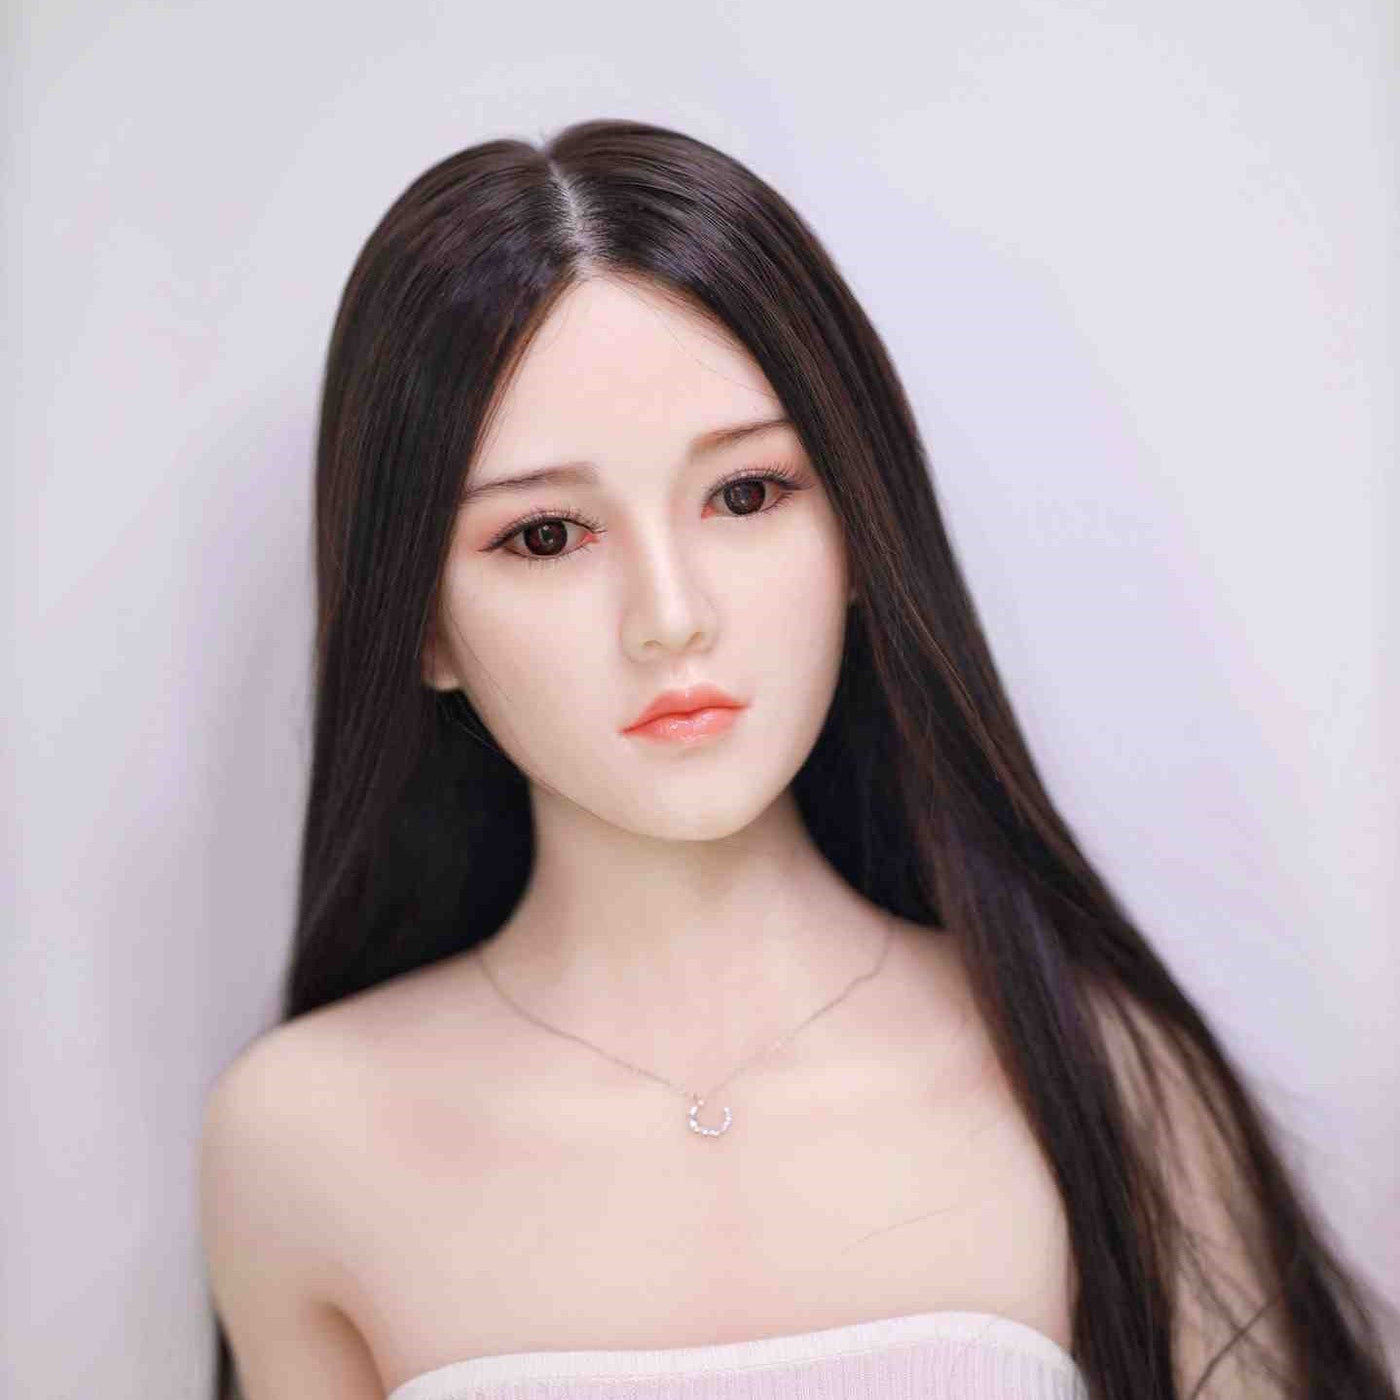 Neodoll Sugar Babe - Kenzie - Silicone Sex Doll Head - Implanted Hair - Silicone Colour